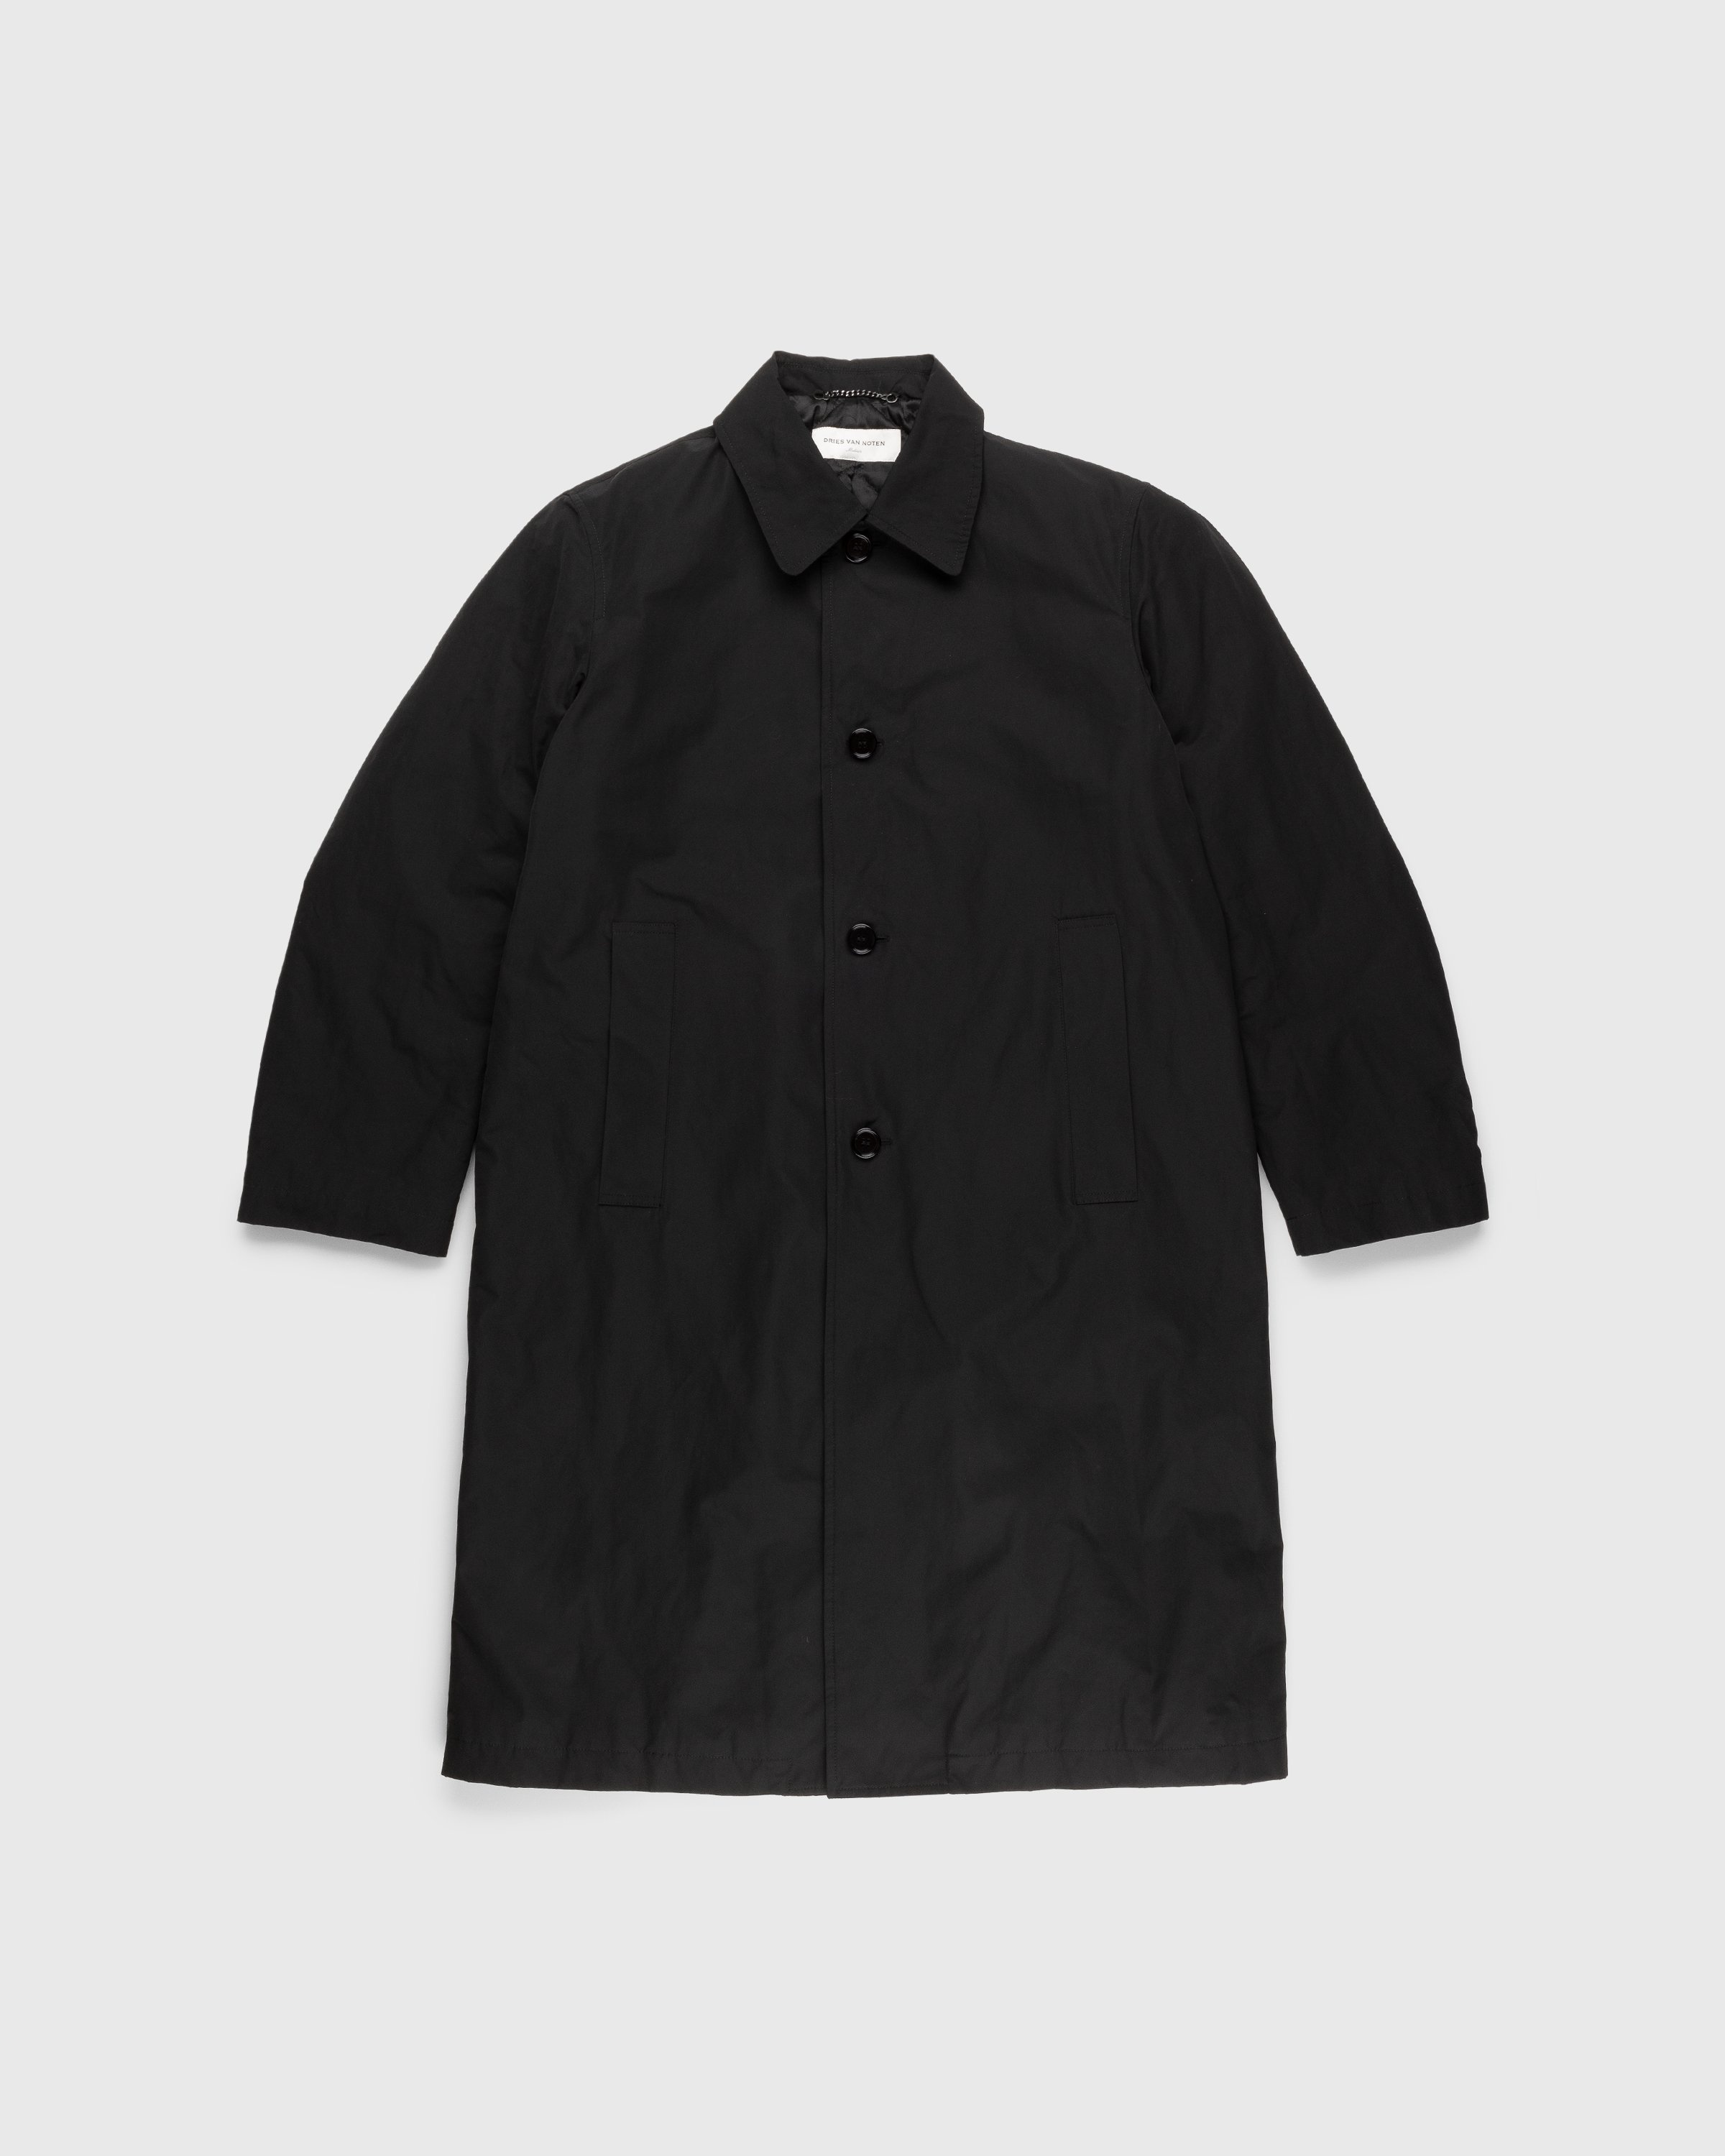 Dries van Noten – Rankle Coat Black - Outerwear - Black - Image 1